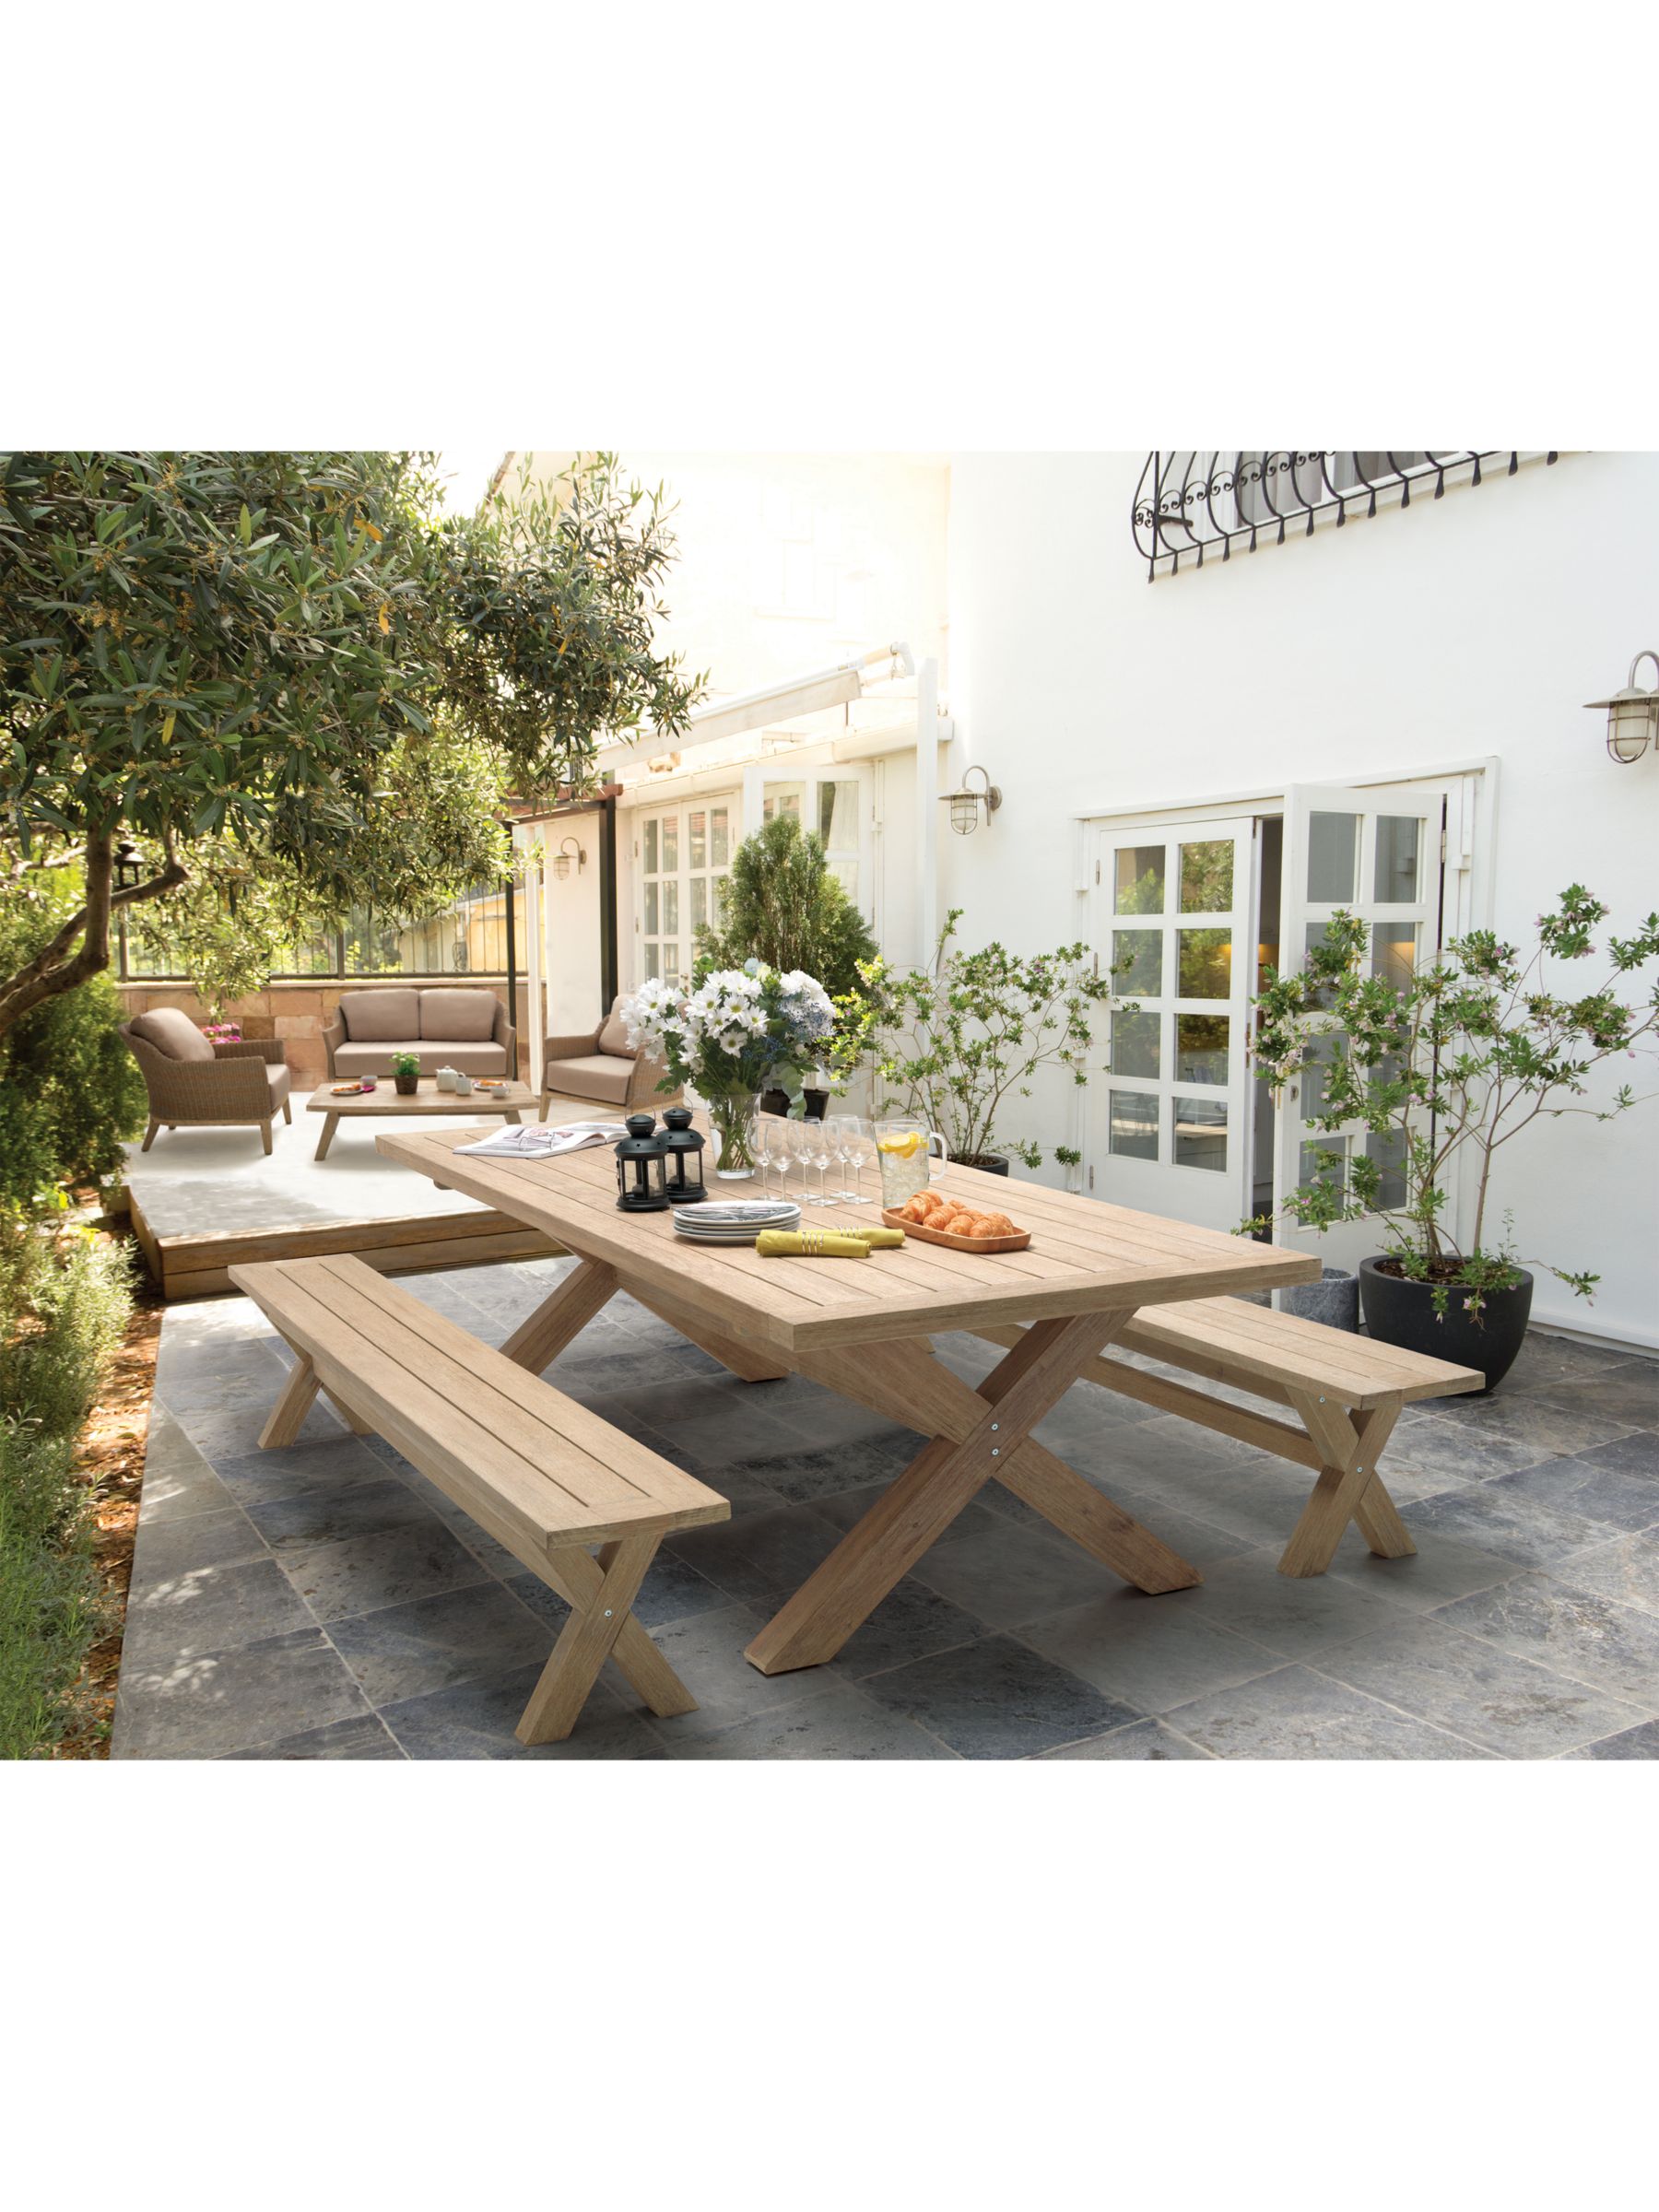 KETTLER Cora 8 Seater Rectangular Garden Dining Table, FSC-Certified (Acacia Wood), White Wash